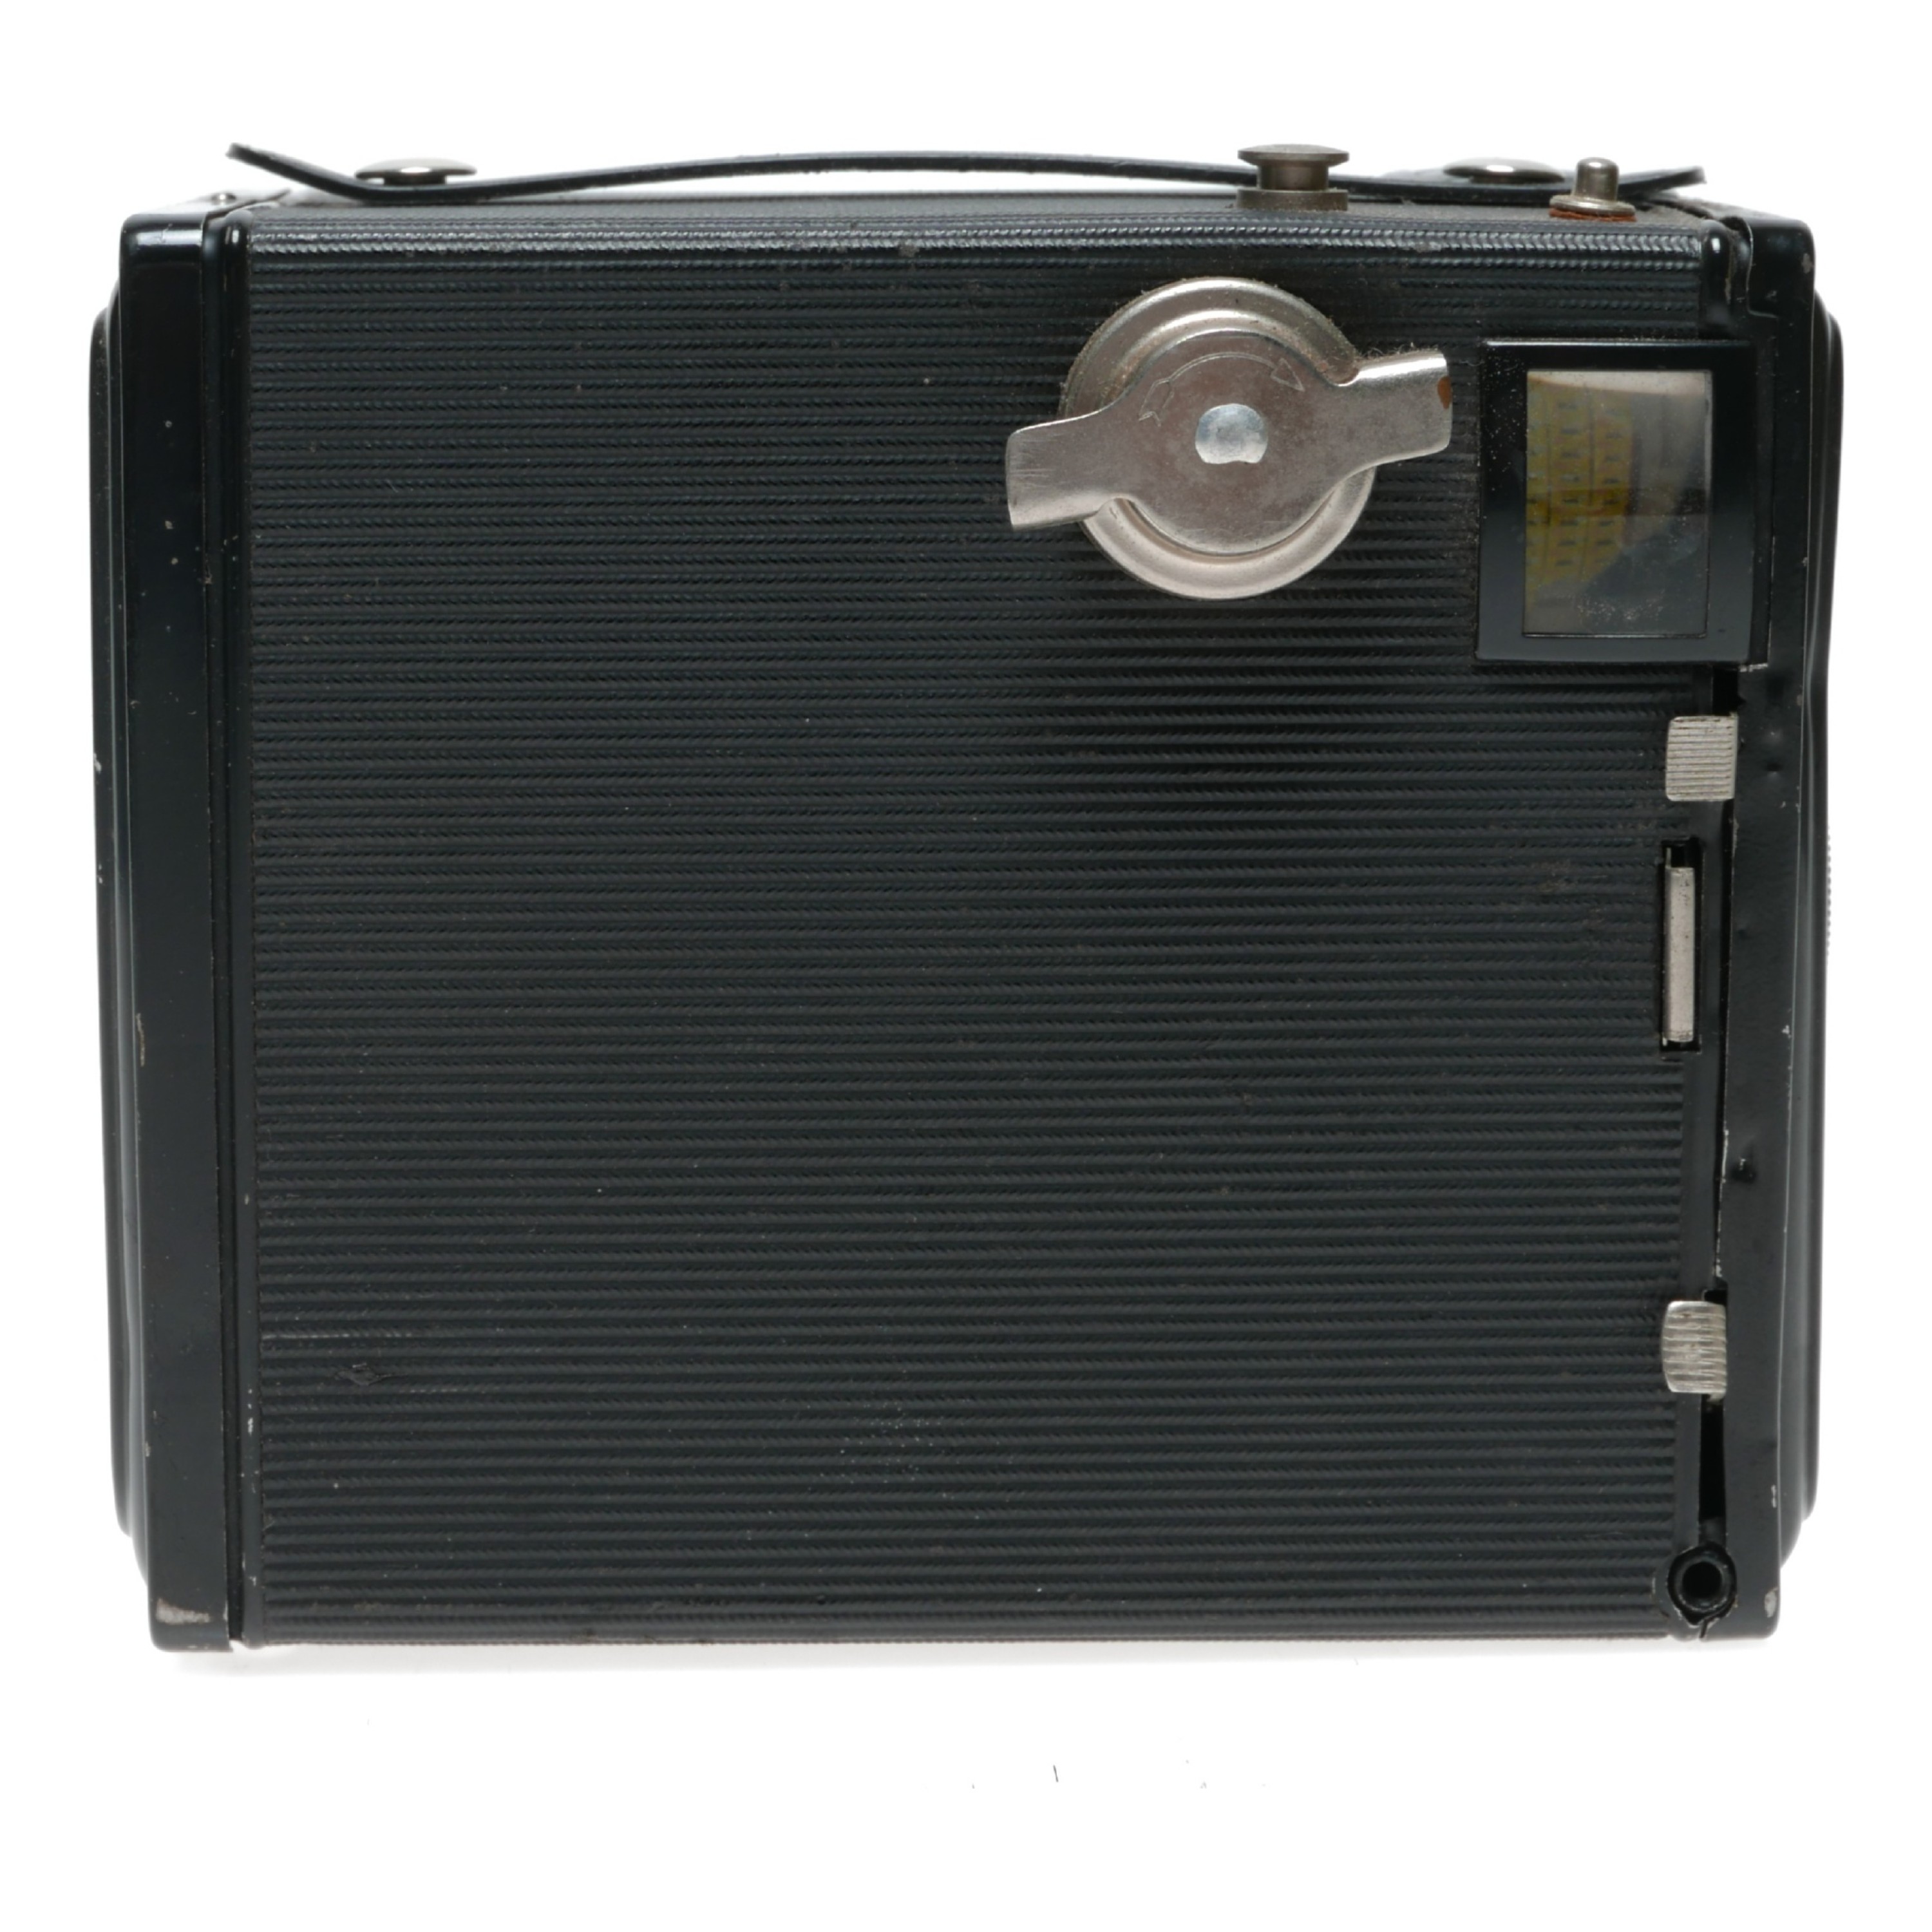 Agfa Synchro Box 600 Medium Format 120 Roll Film Camera 